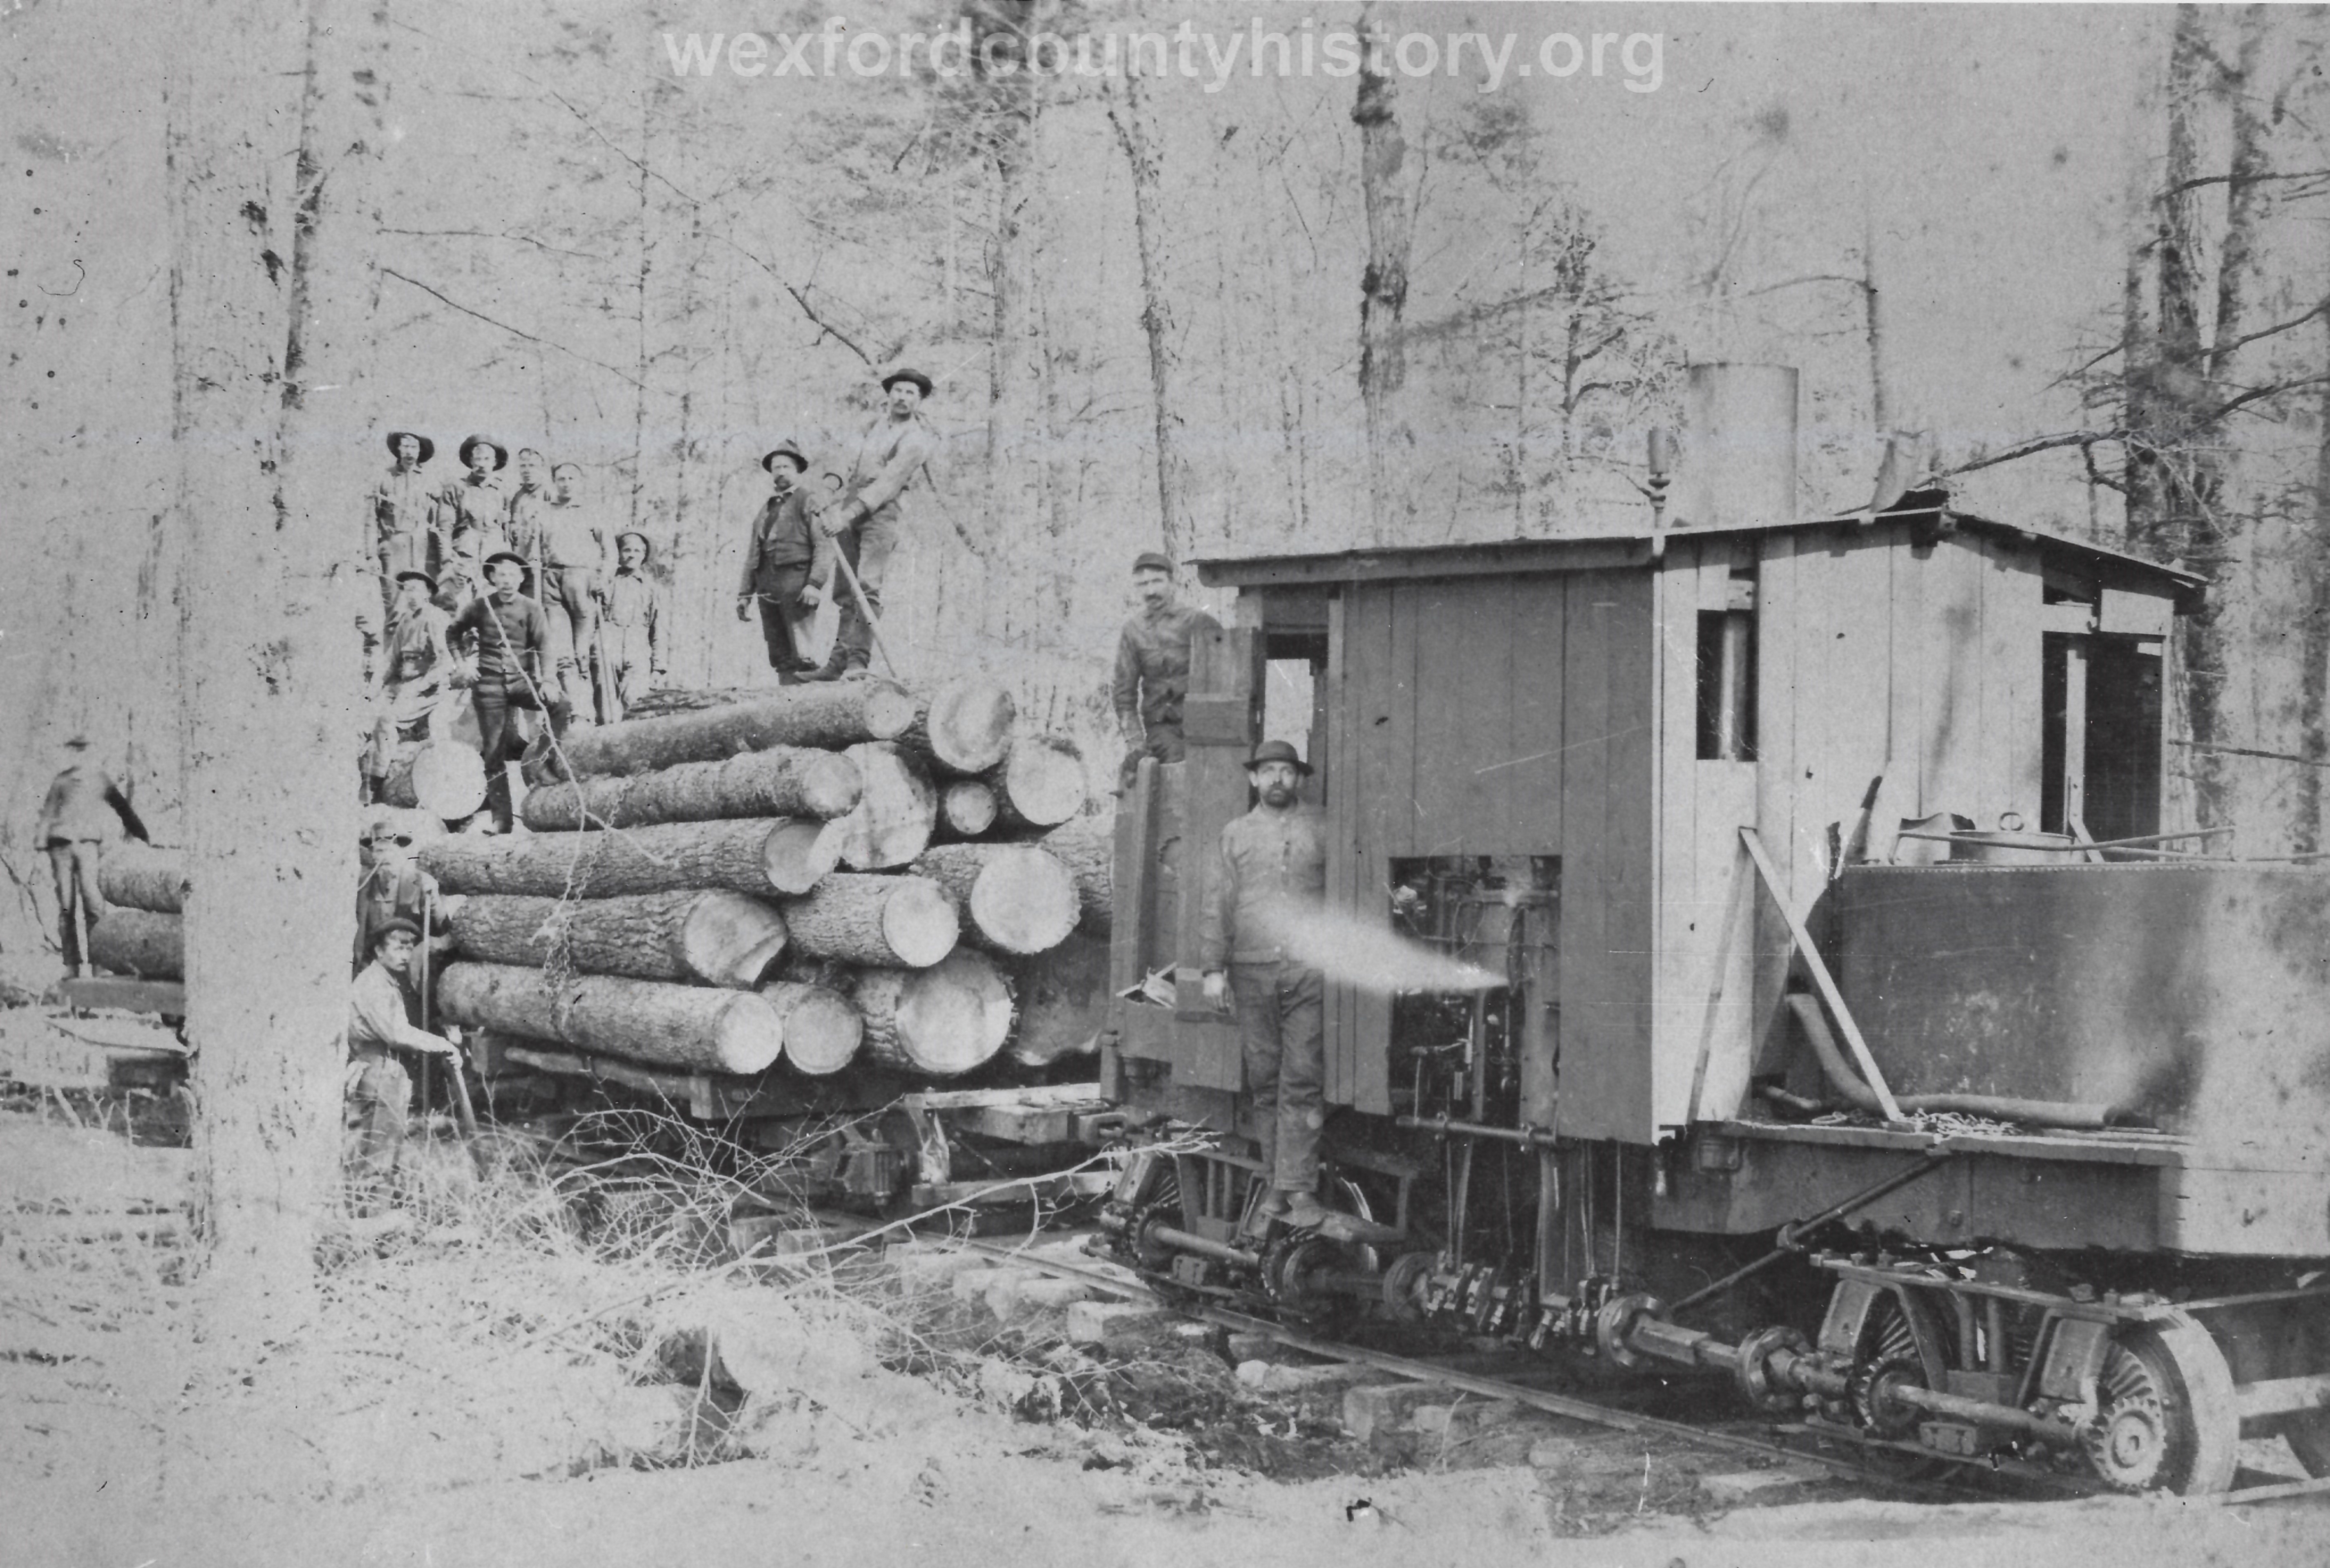 Cadillac-Lumber-Locomotive-And-Car-With-Lumberjacks-On-Stacked-Lumber